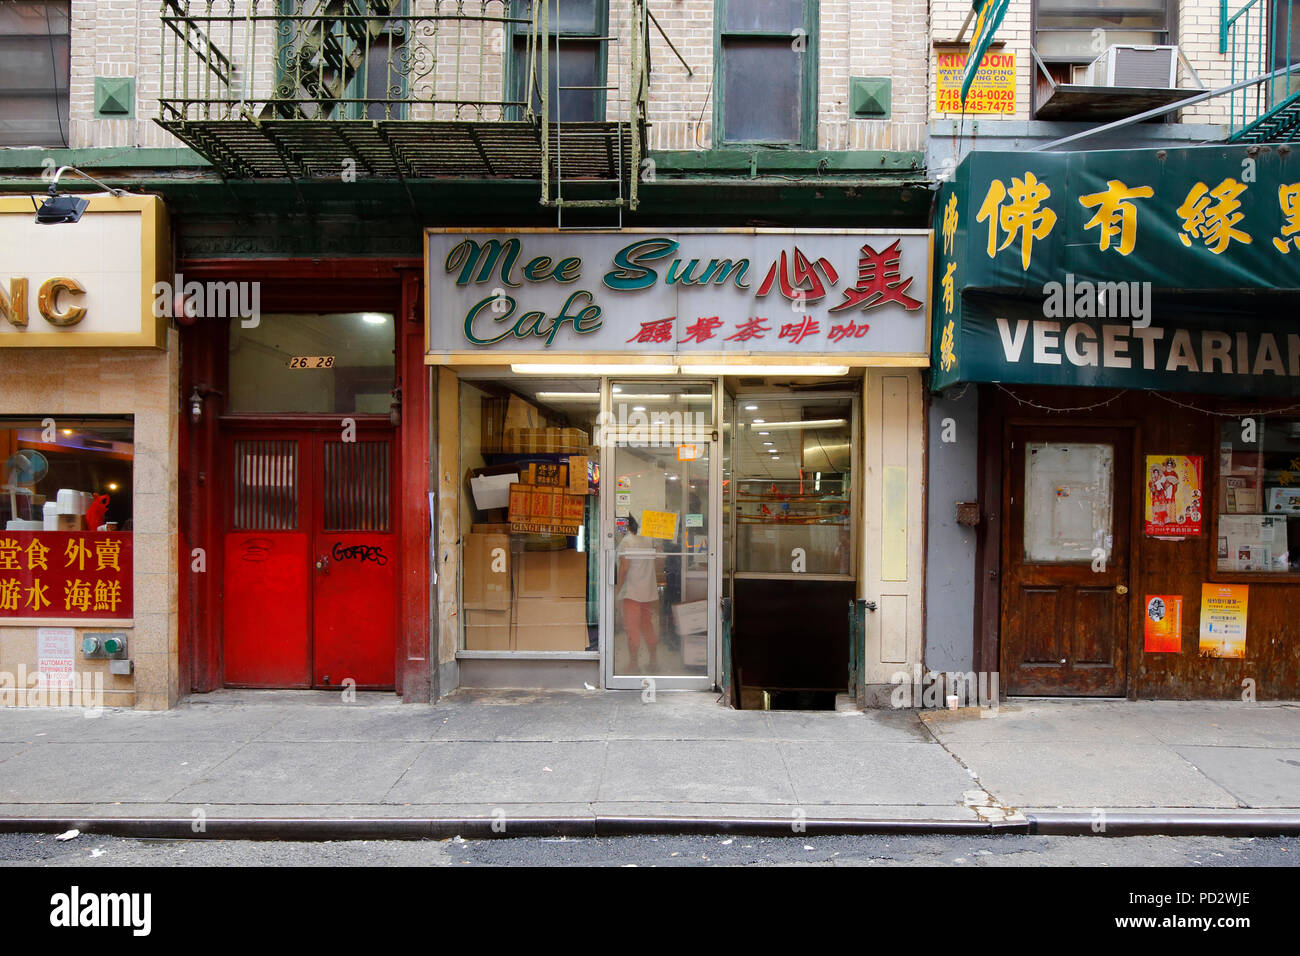 Mee Sum Cafe 美心, 26 Pell St, New York, New York. Di fronte a un bar nel quartiere di Chinatown a Manhattan. Foto Stock